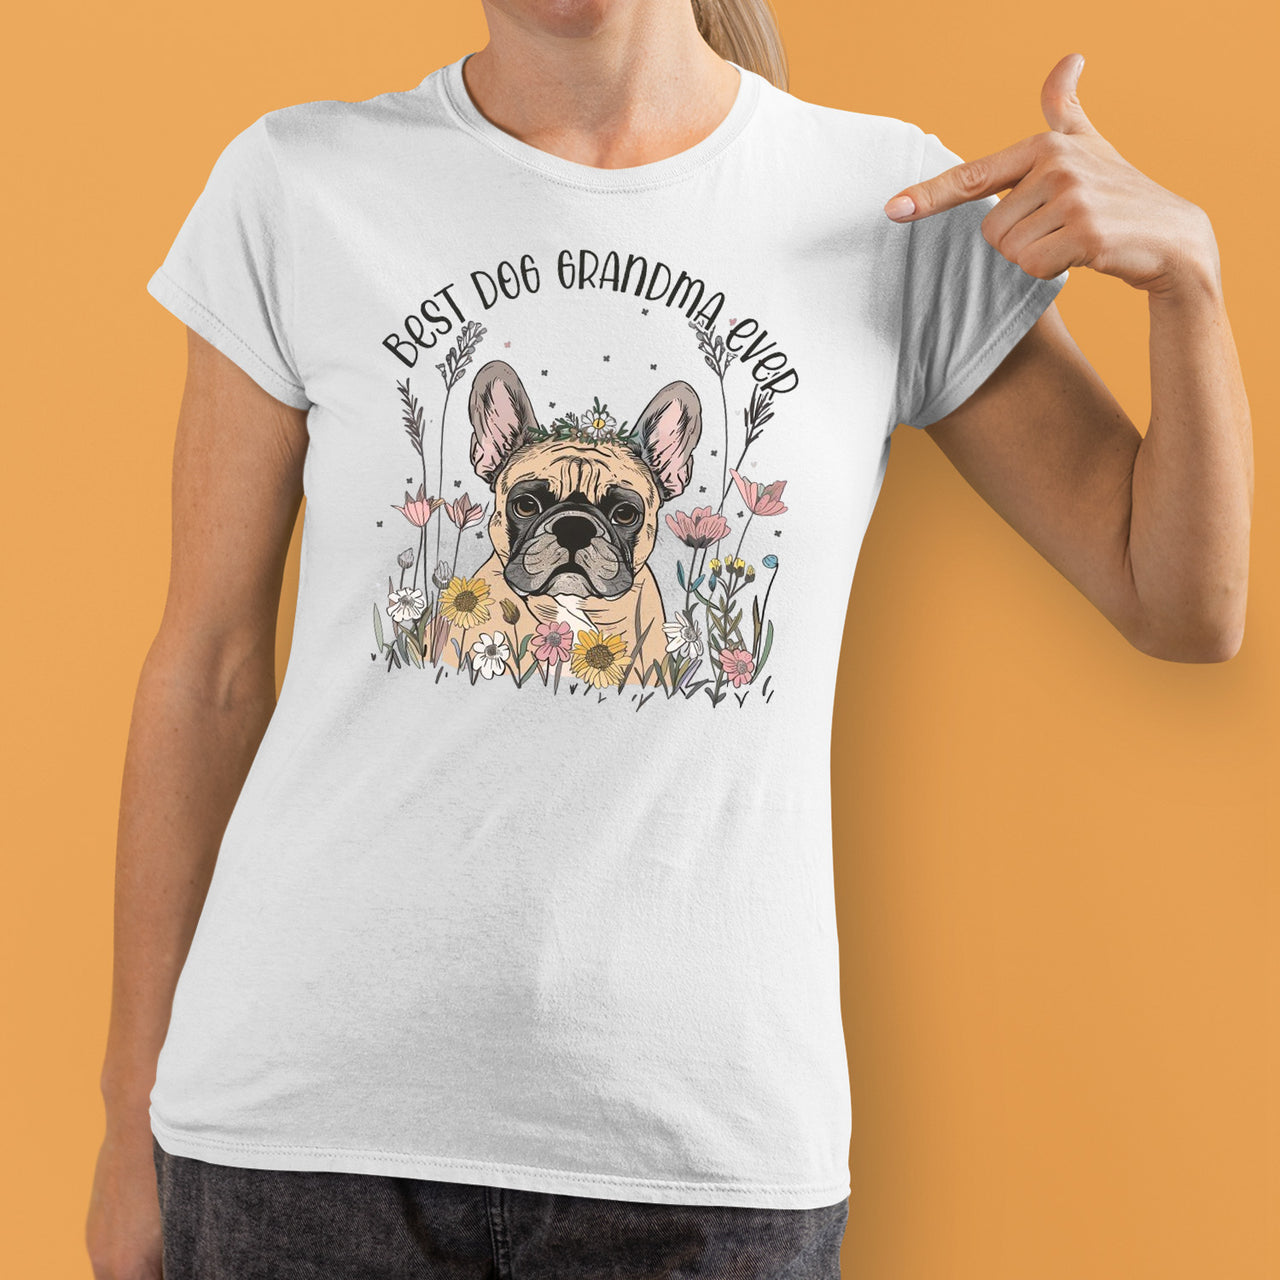 French Bulldog T-shirt, Pet Lover Shirt, Dog Lover Shirt, Best Dog Grandma Ever T-Shirt, Dog Owner Shirt, Gift For Dog Grandma, Funny Dog Shirts, Women Dog T-Shirt, Mother's Day Gift, Dog Lover Wife Gifts, Dog Shirt